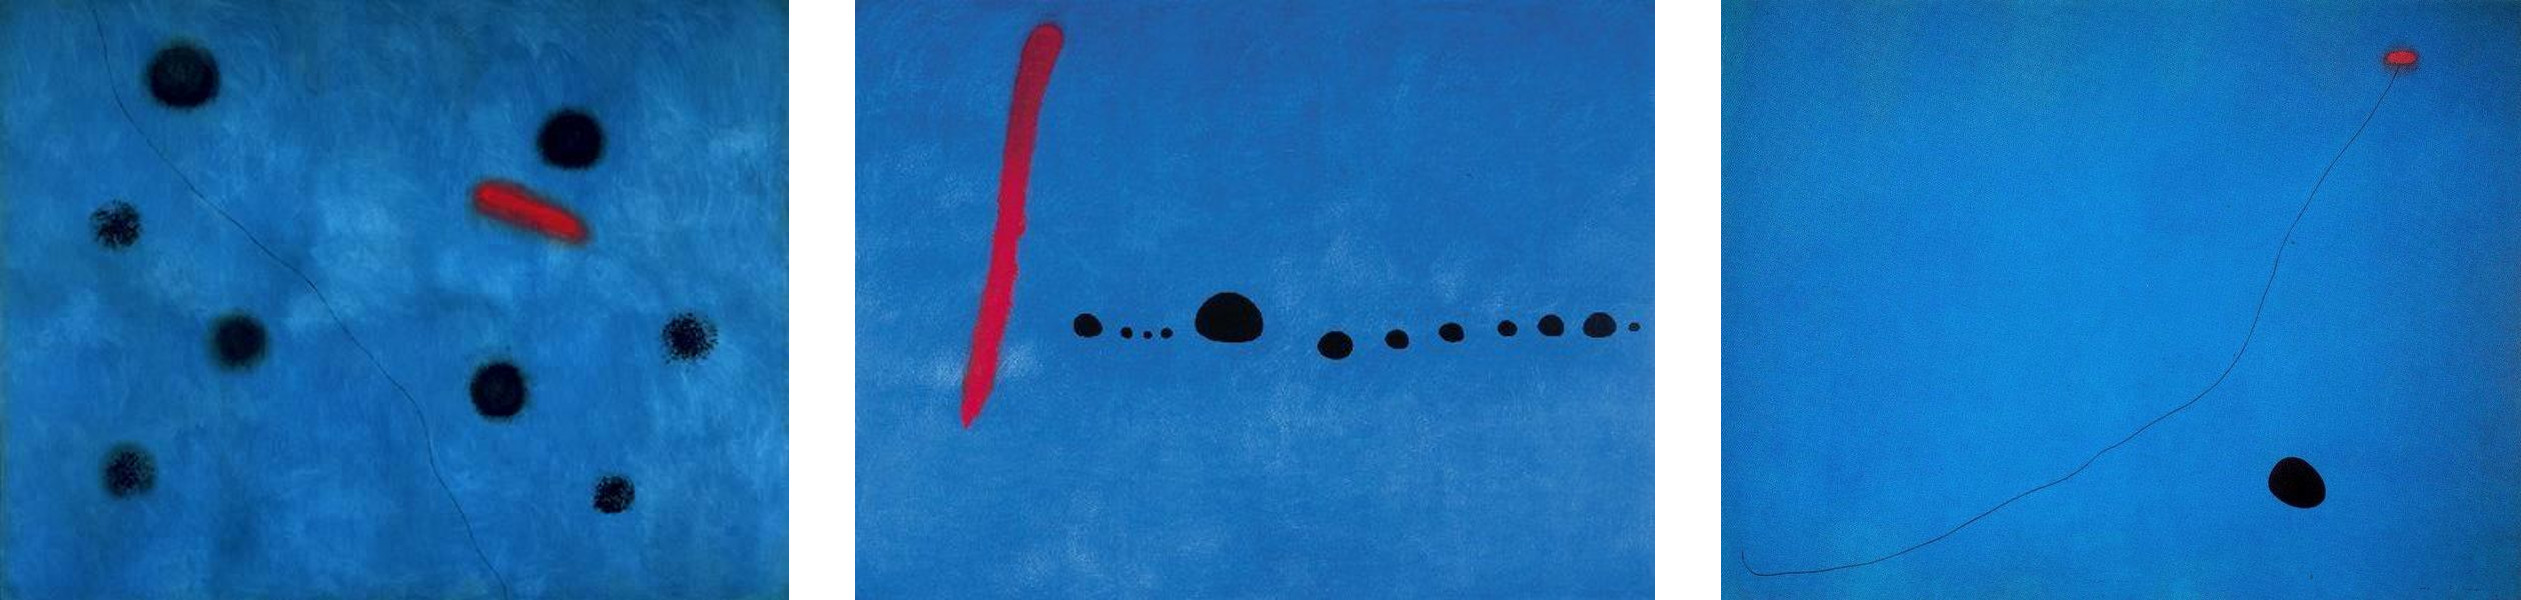 Triptyque de Joan Miró intitulé Bleu 1, Bleu 2, Bleu 3 et peint en 1961.